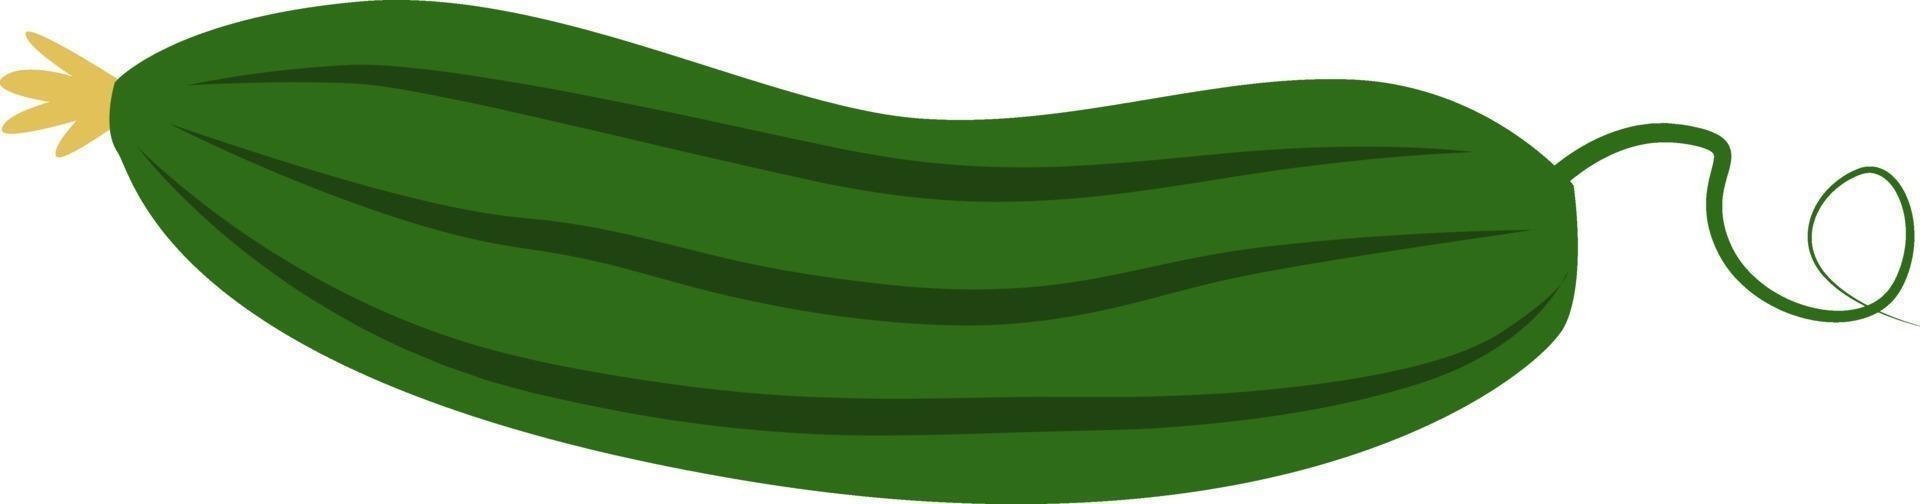 grön zucchini, illustration, vektor på vit bakgrund